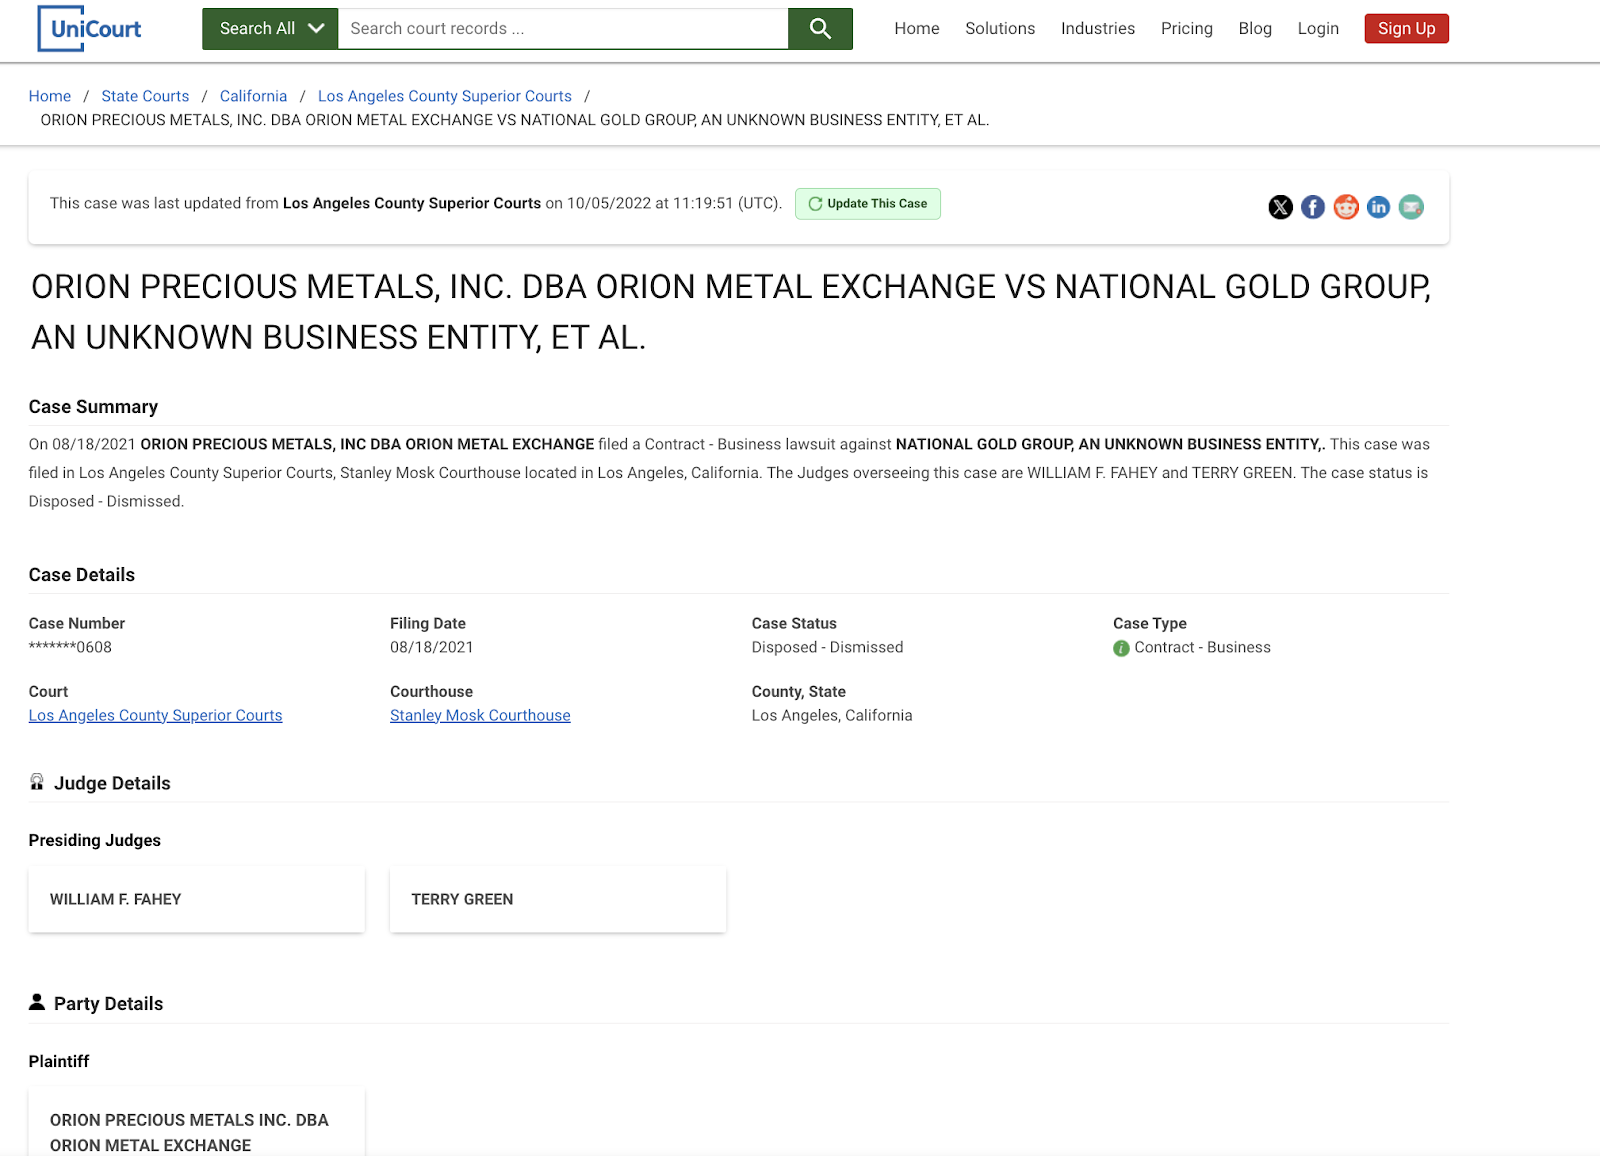 Orion Metal Exchange lawsuit